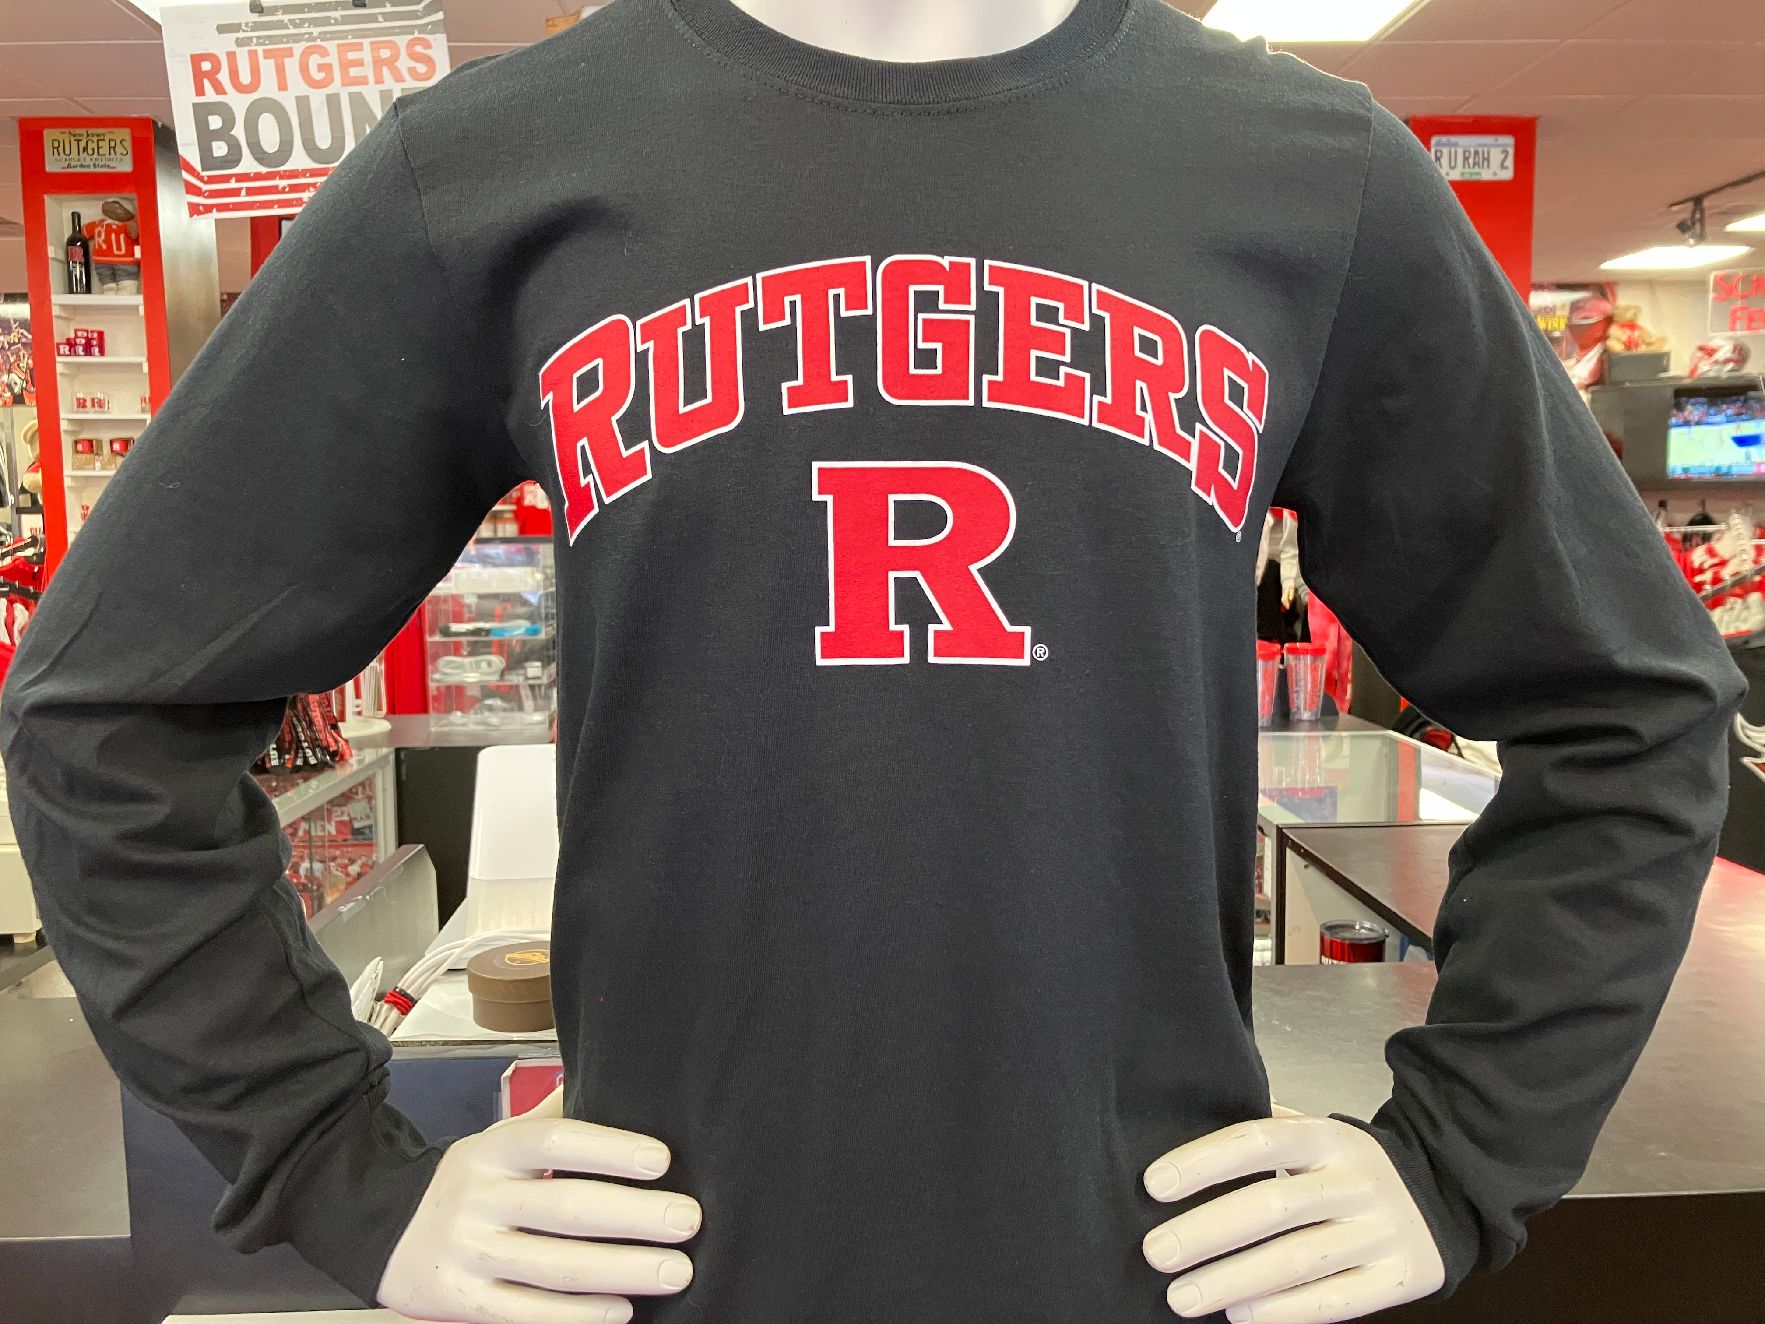 Rutgers Long Sleeve T-shirt Black - Scarlet Fever Rutgers Gear